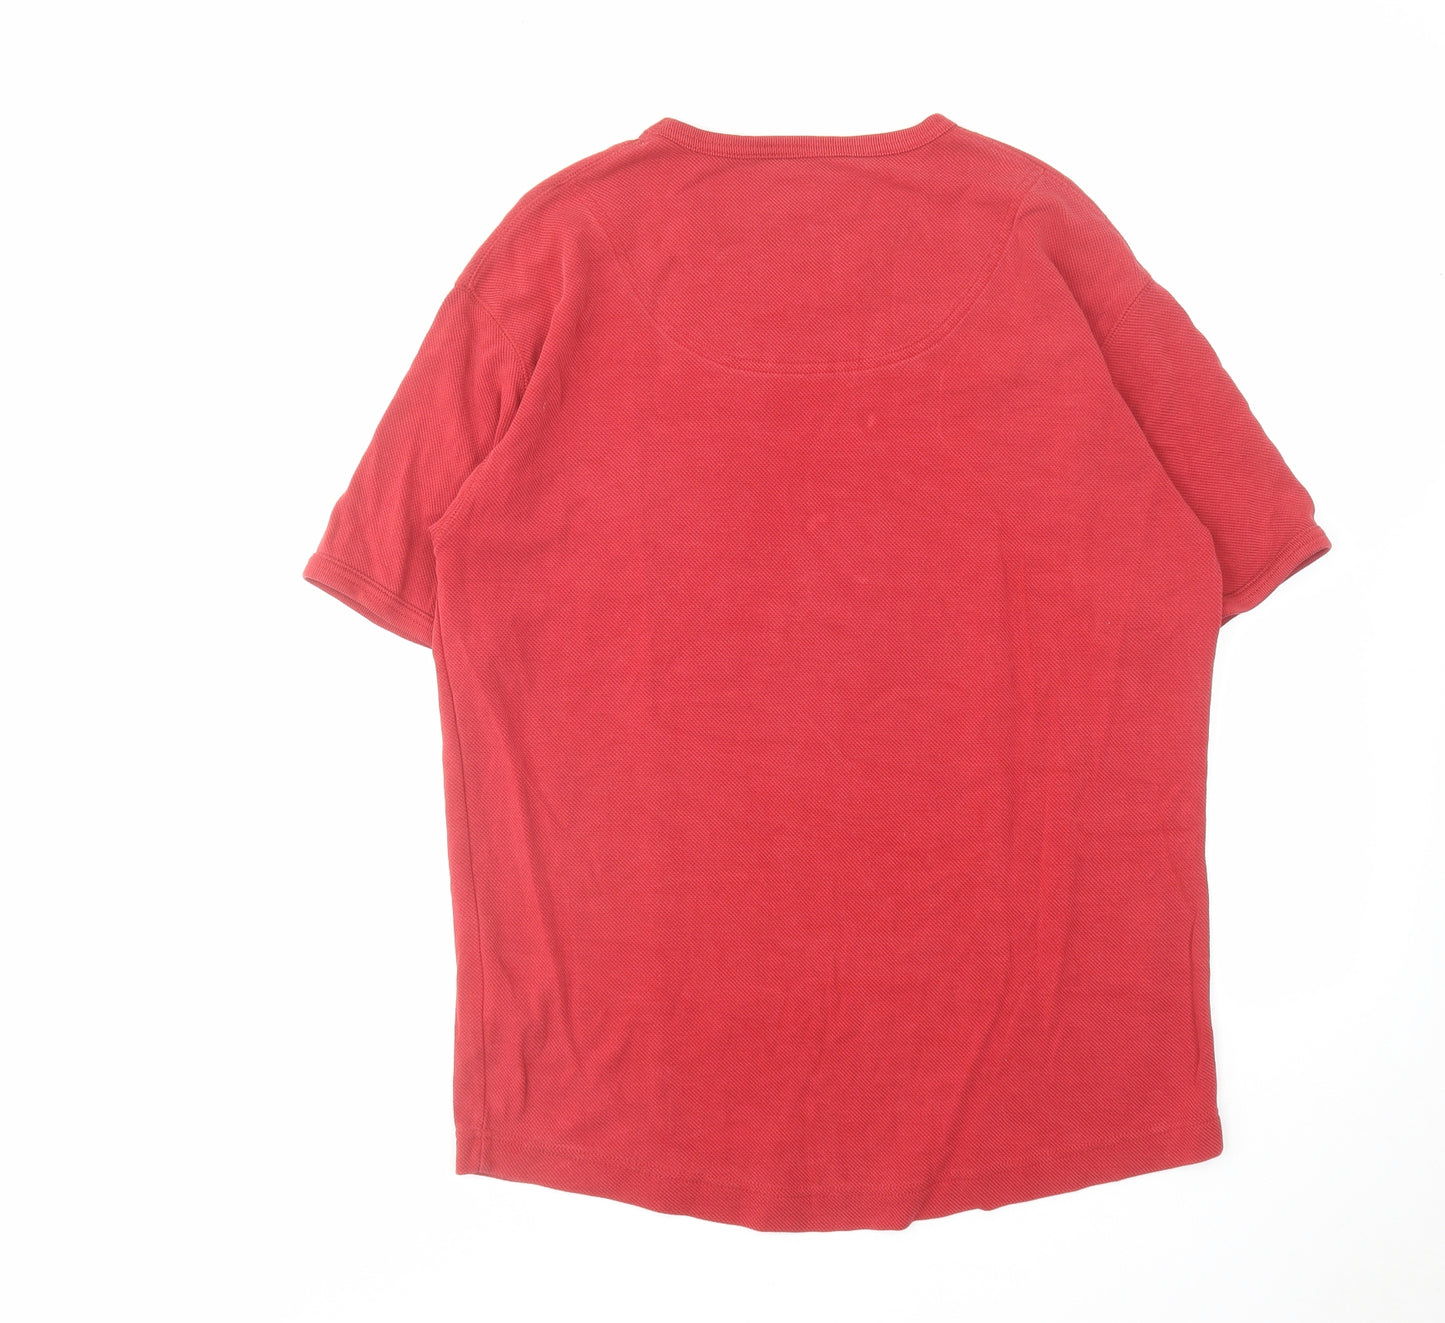 Ted Baker Mens Red Cotton T-Shirt Size L V-Neck